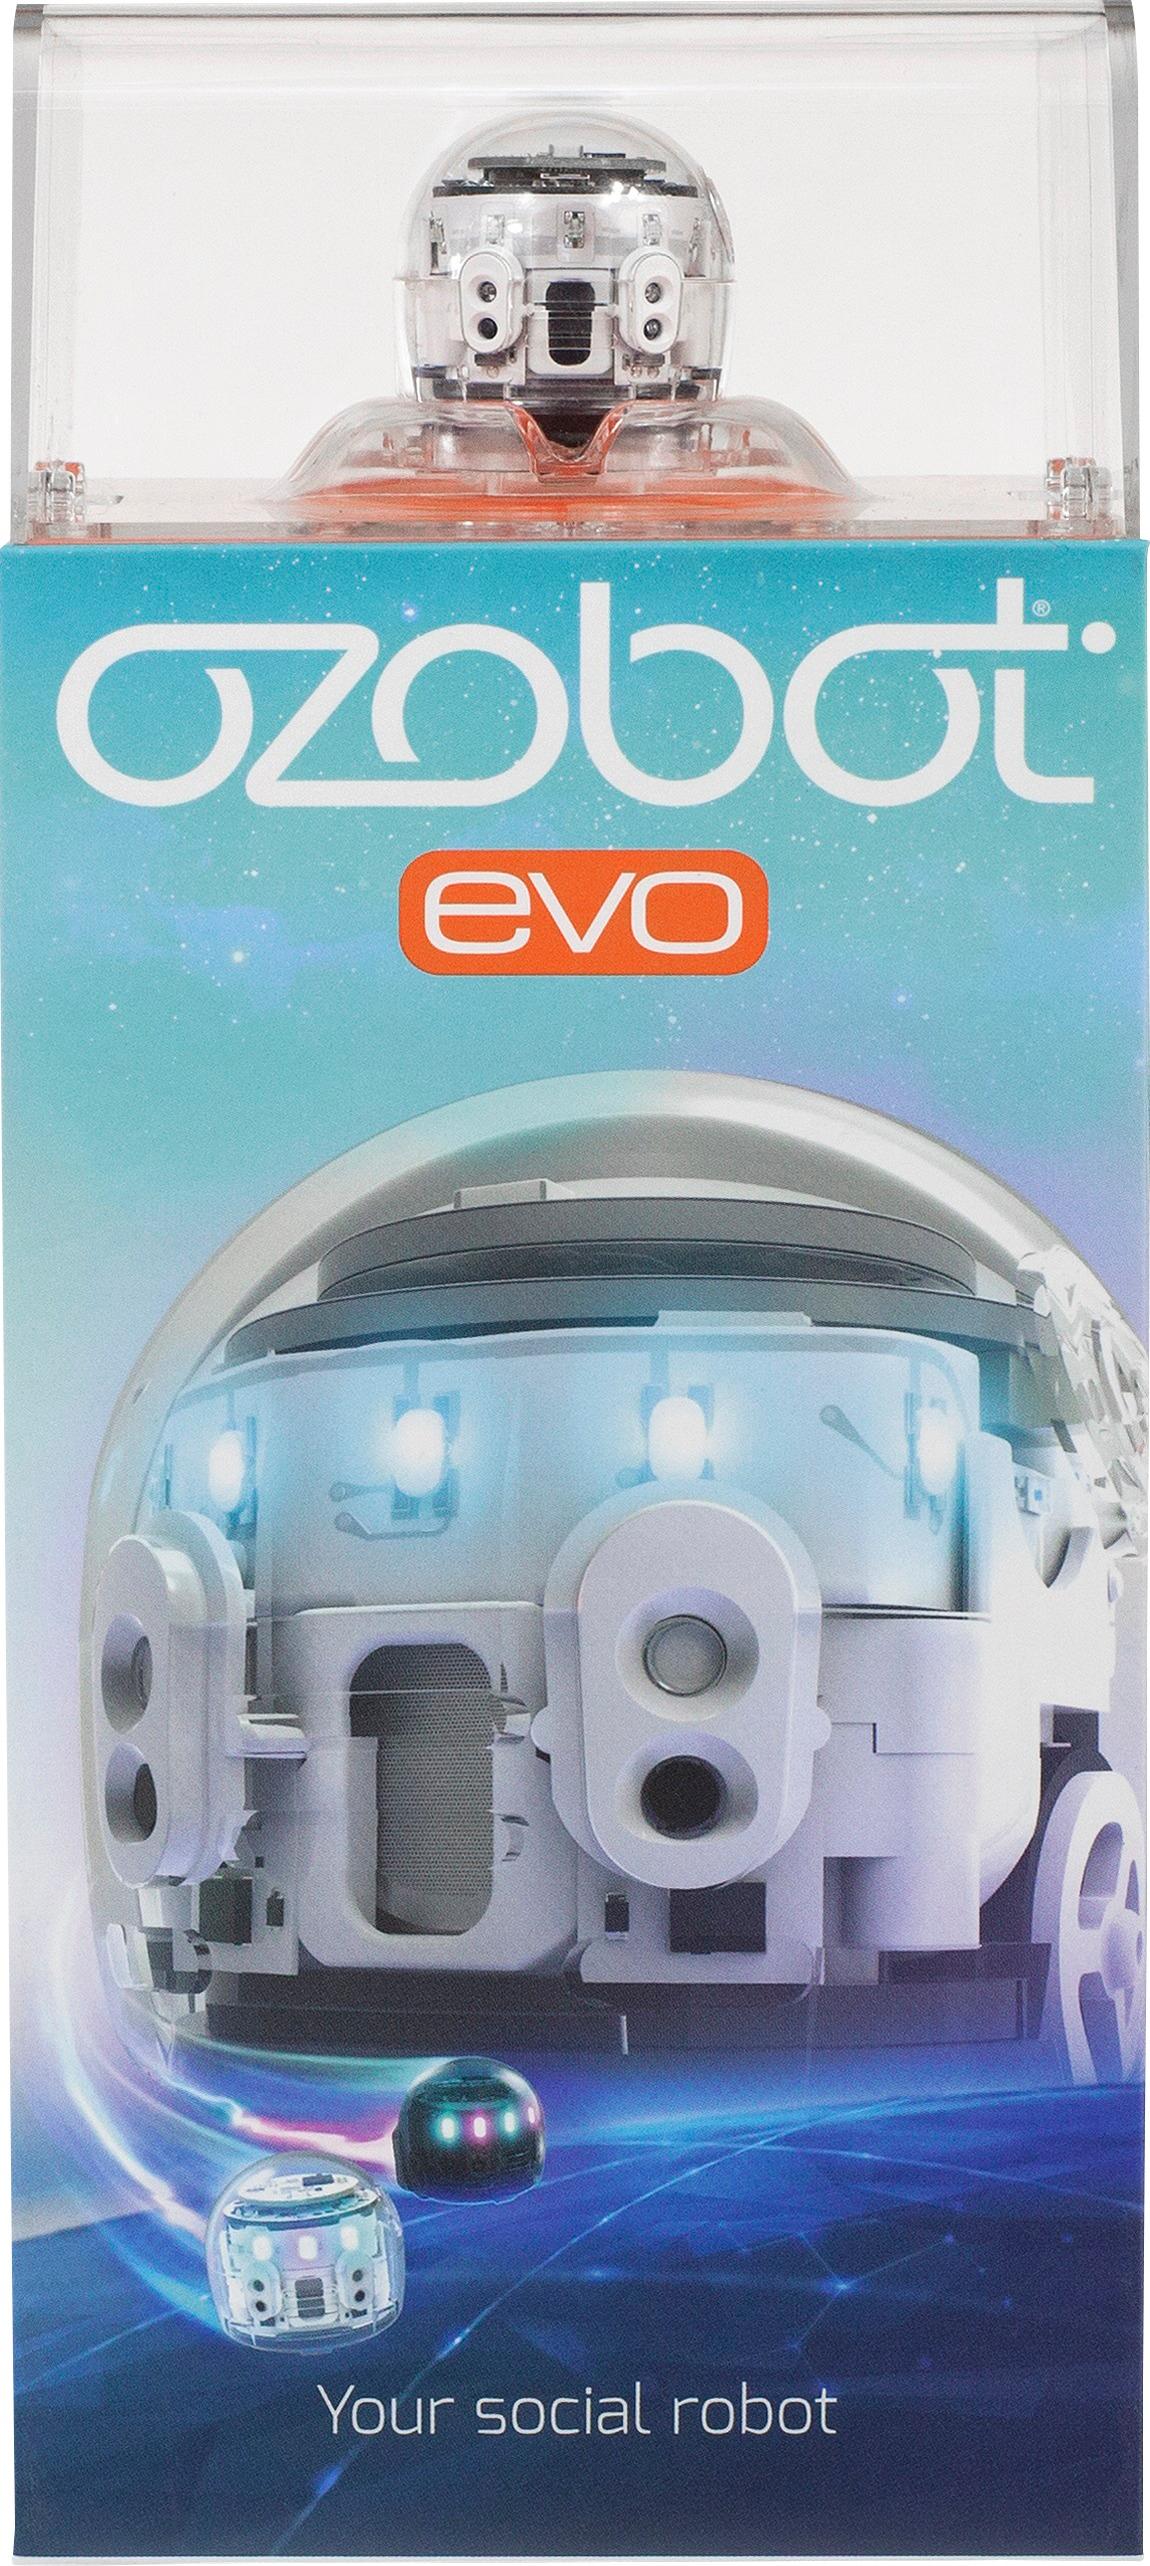 Ozobot OZO-040301-04 Bit 2.0 Coding Robot Starter Pack, White